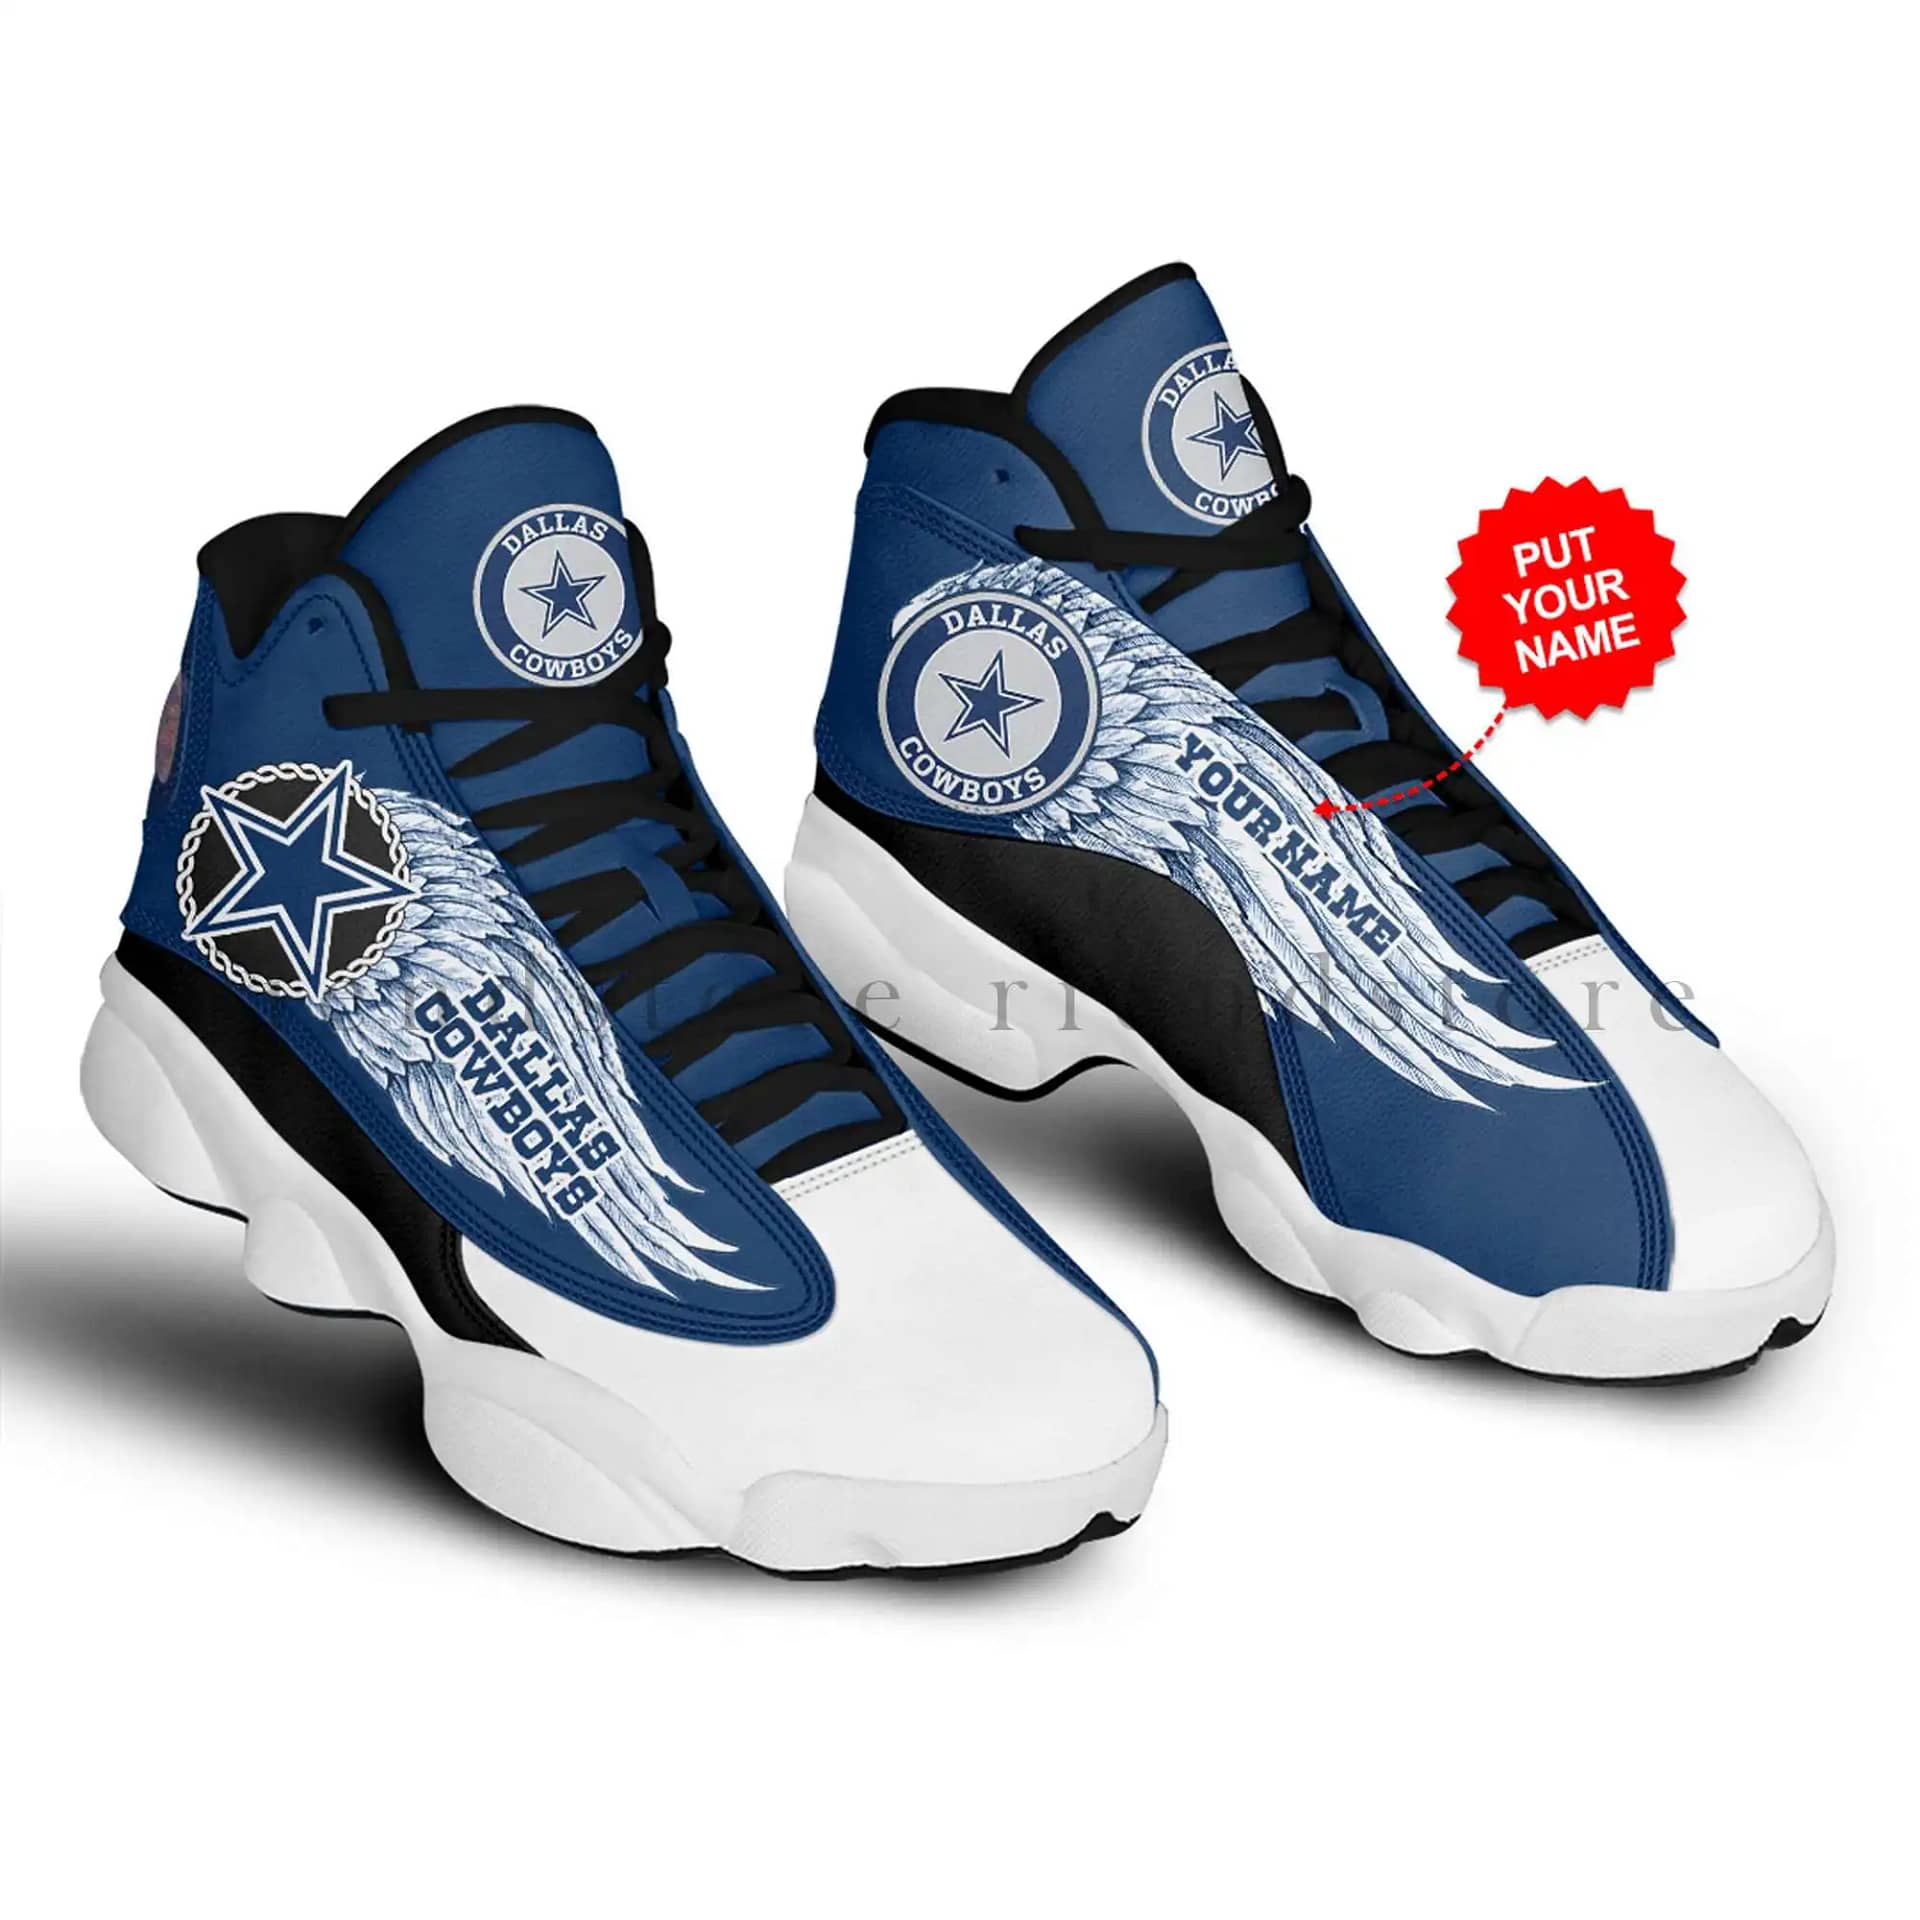 Personalized Dallas Cowboys Air Jordan Shoes